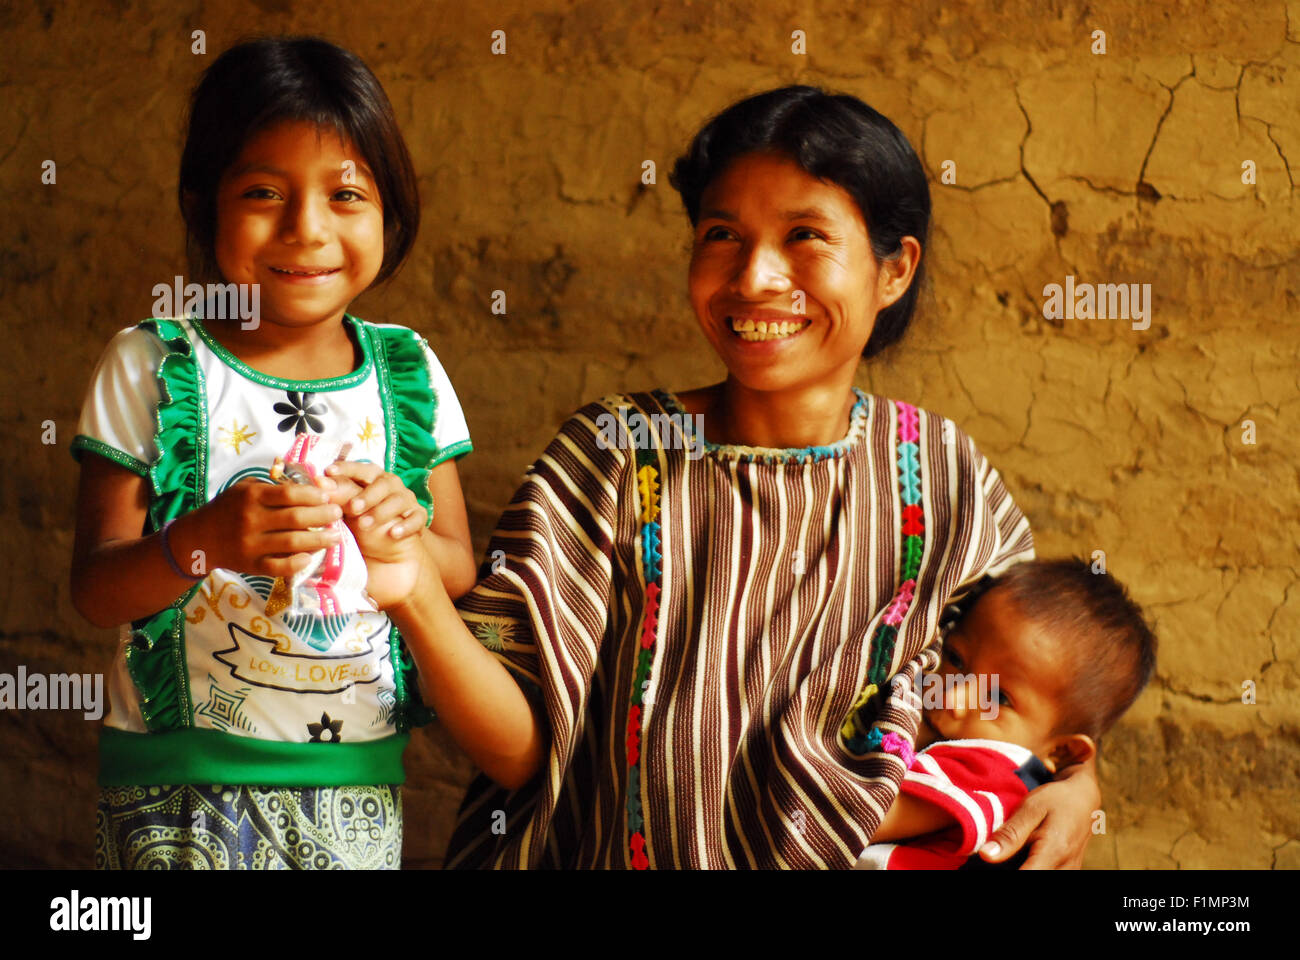 Guatemala, la Democratia, mother (Andrea Mendez Hernandez 33) breastfeeding baby (Horacio Lopez Mendez 1 year) and giving Plumpy nut pack to daughter (Lorena Lopez Mendez 4 years), (MR) Stock Photo